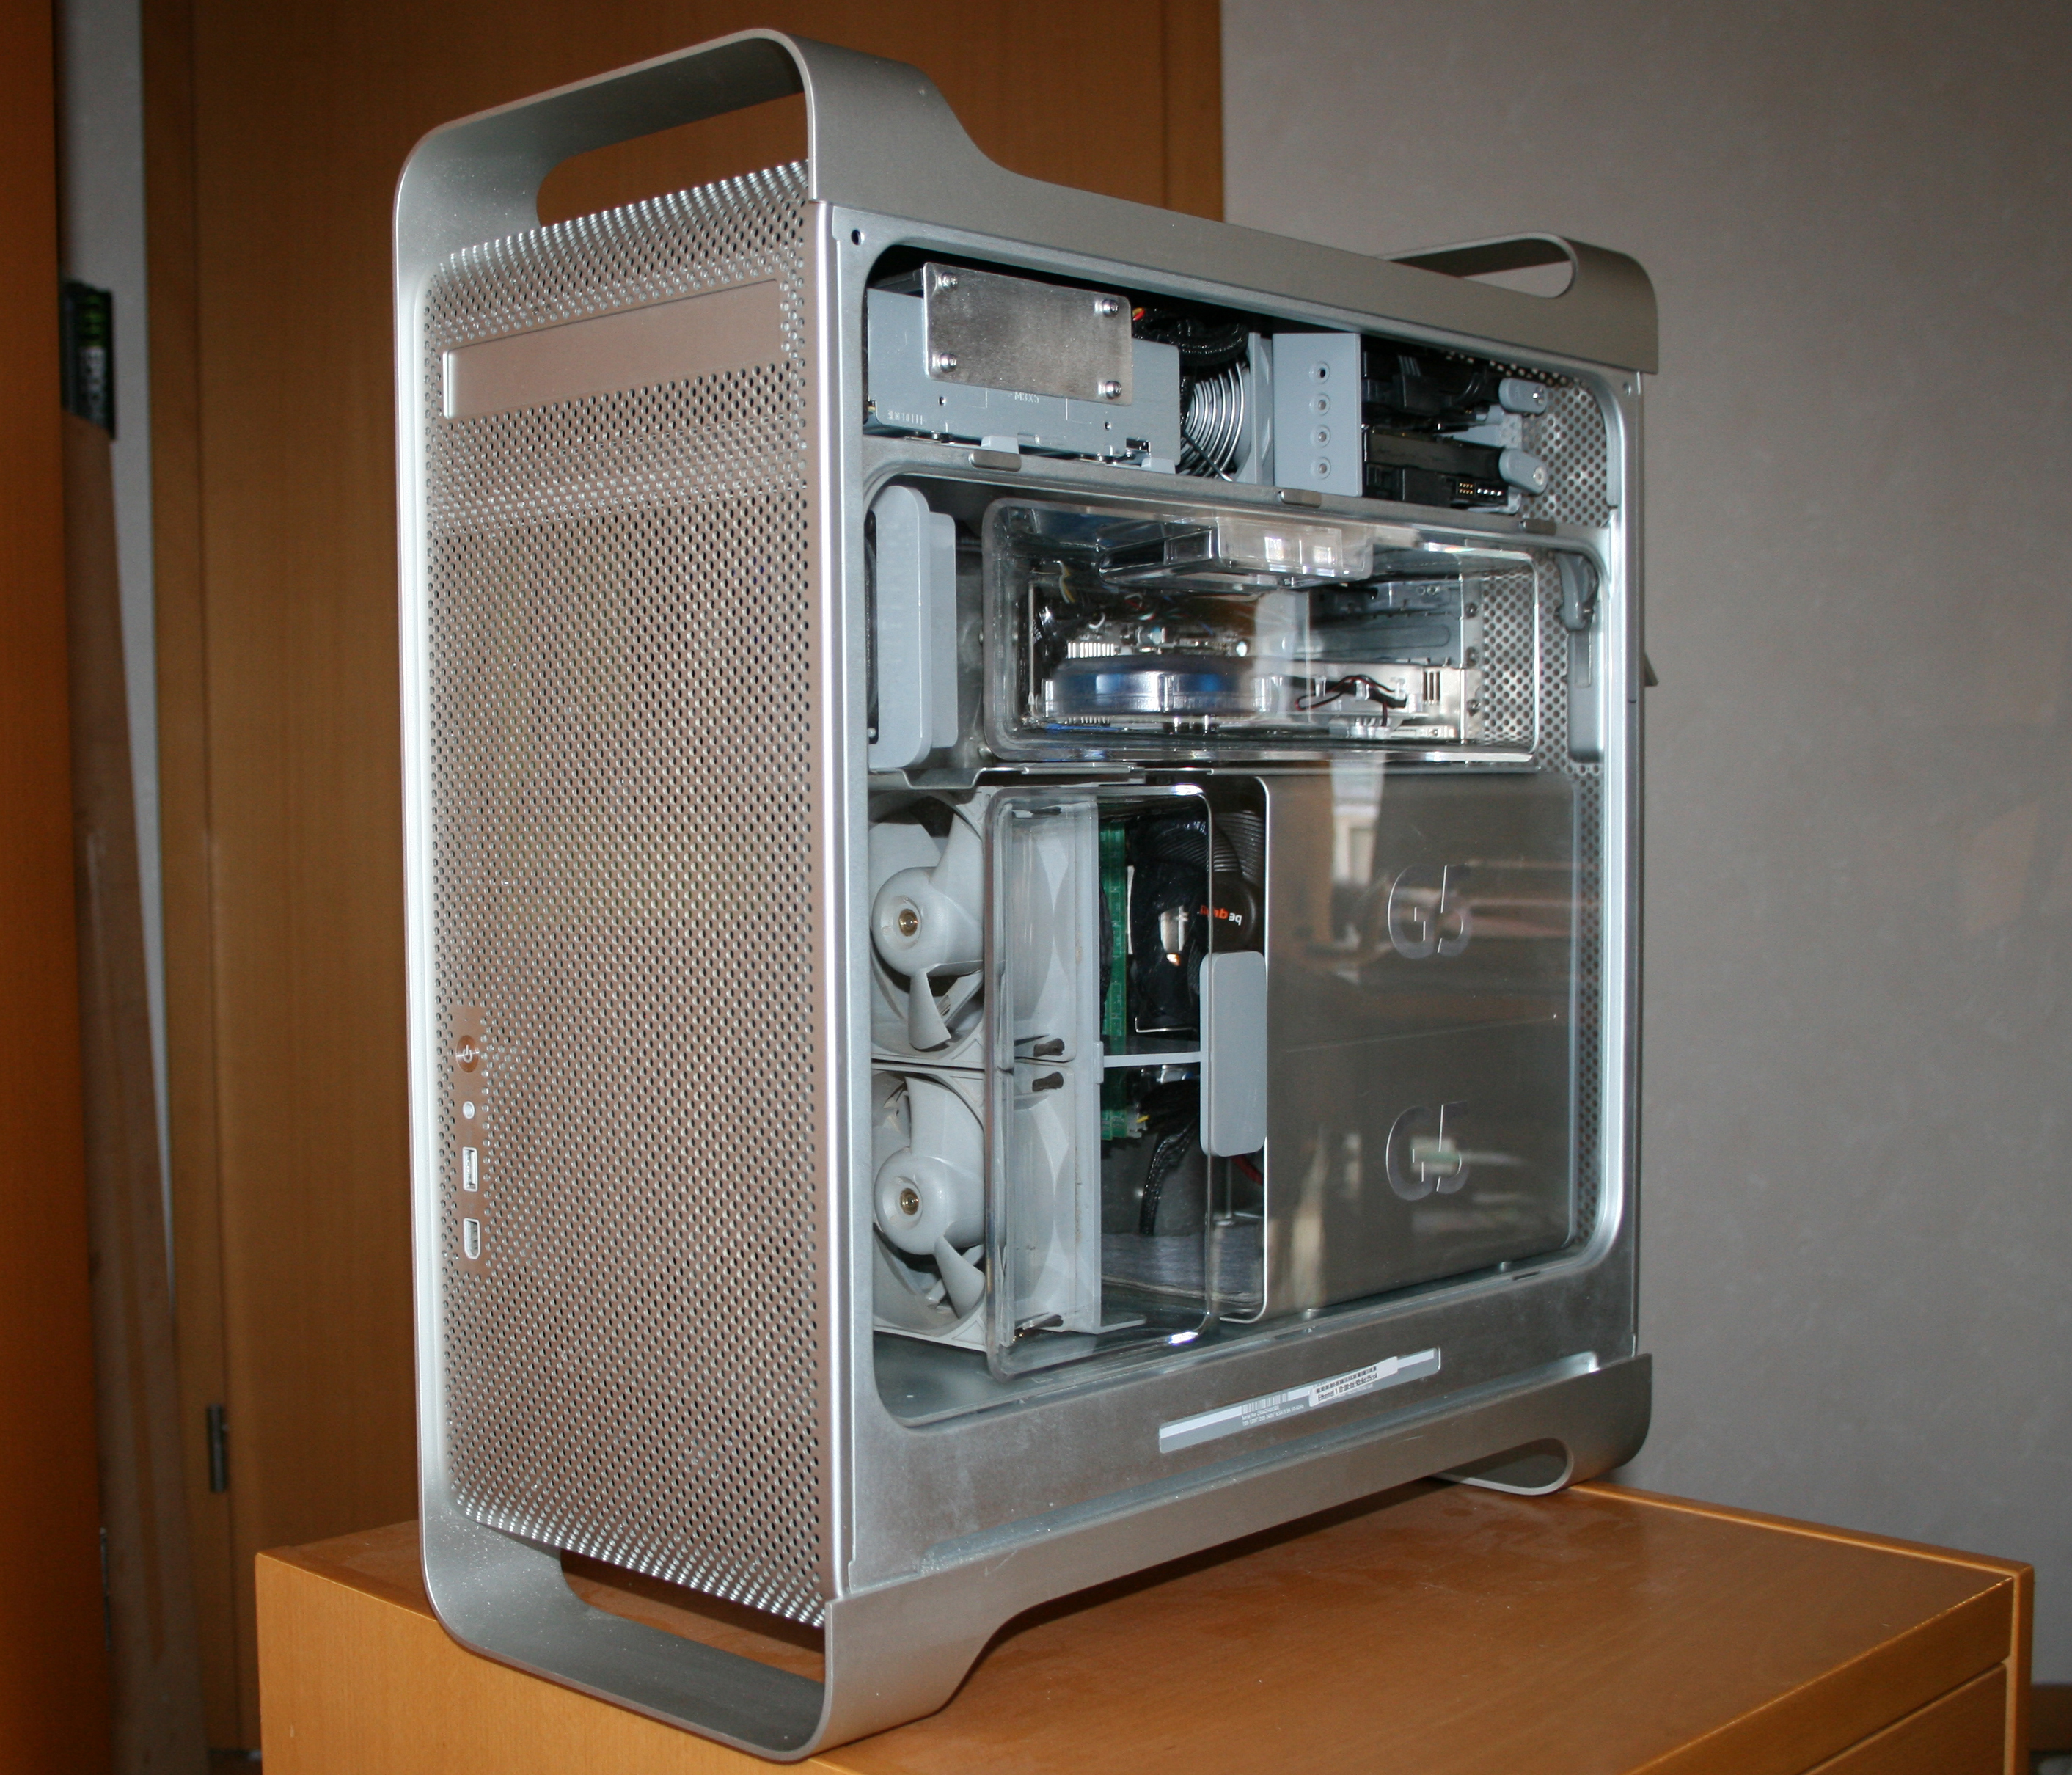 Power Mac G5 case case modification, my third turn! | tonymacx86.com